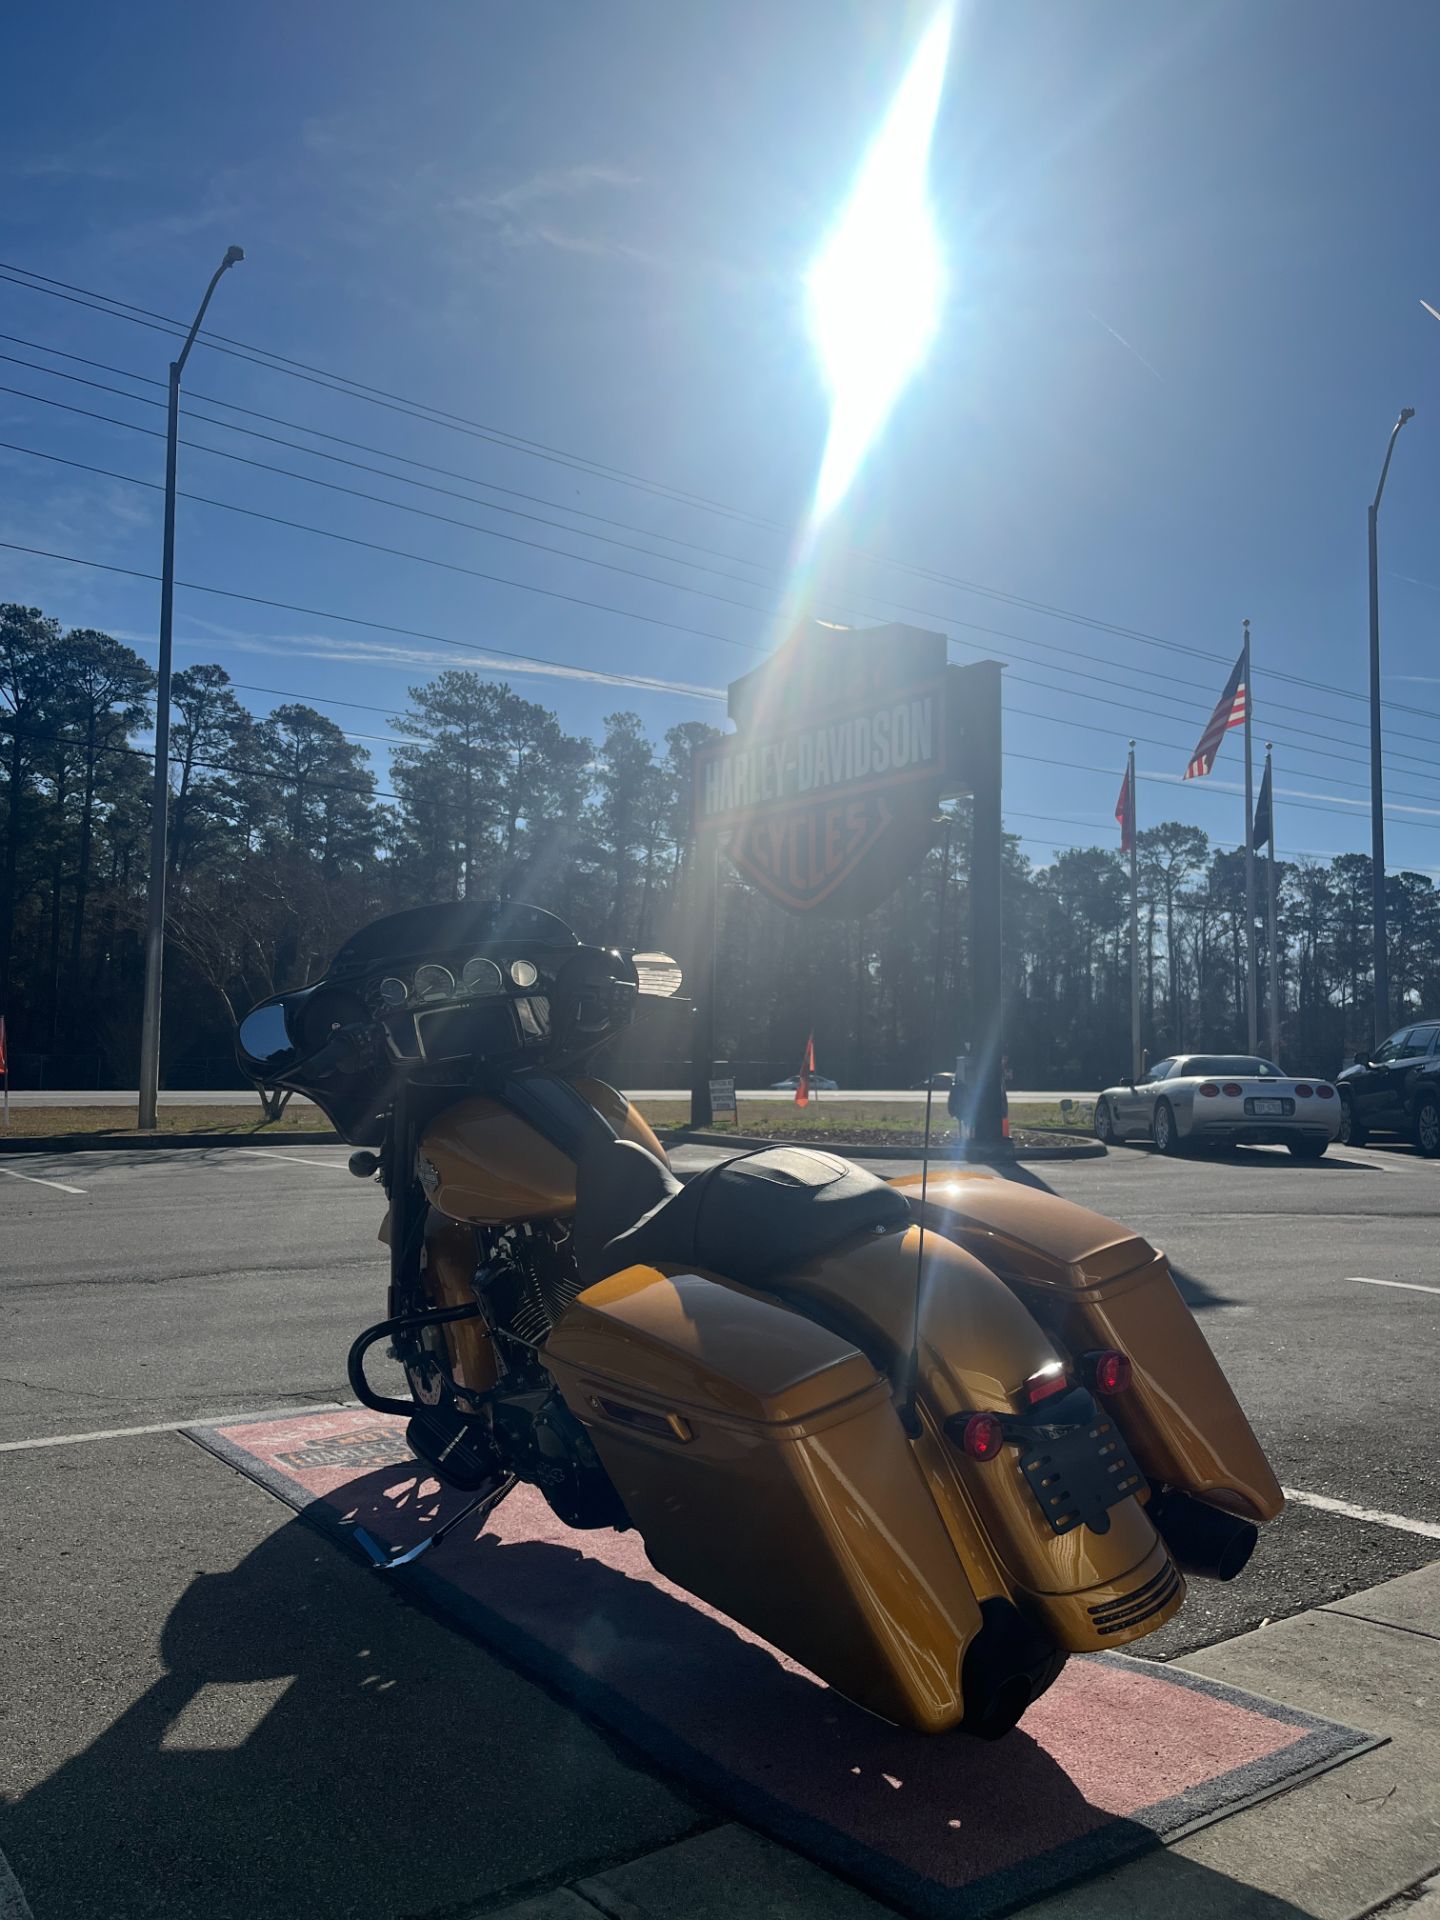 2023 Harley-Davidson Street Glide® Special in Jacksonville, North Carolina - Photo 9